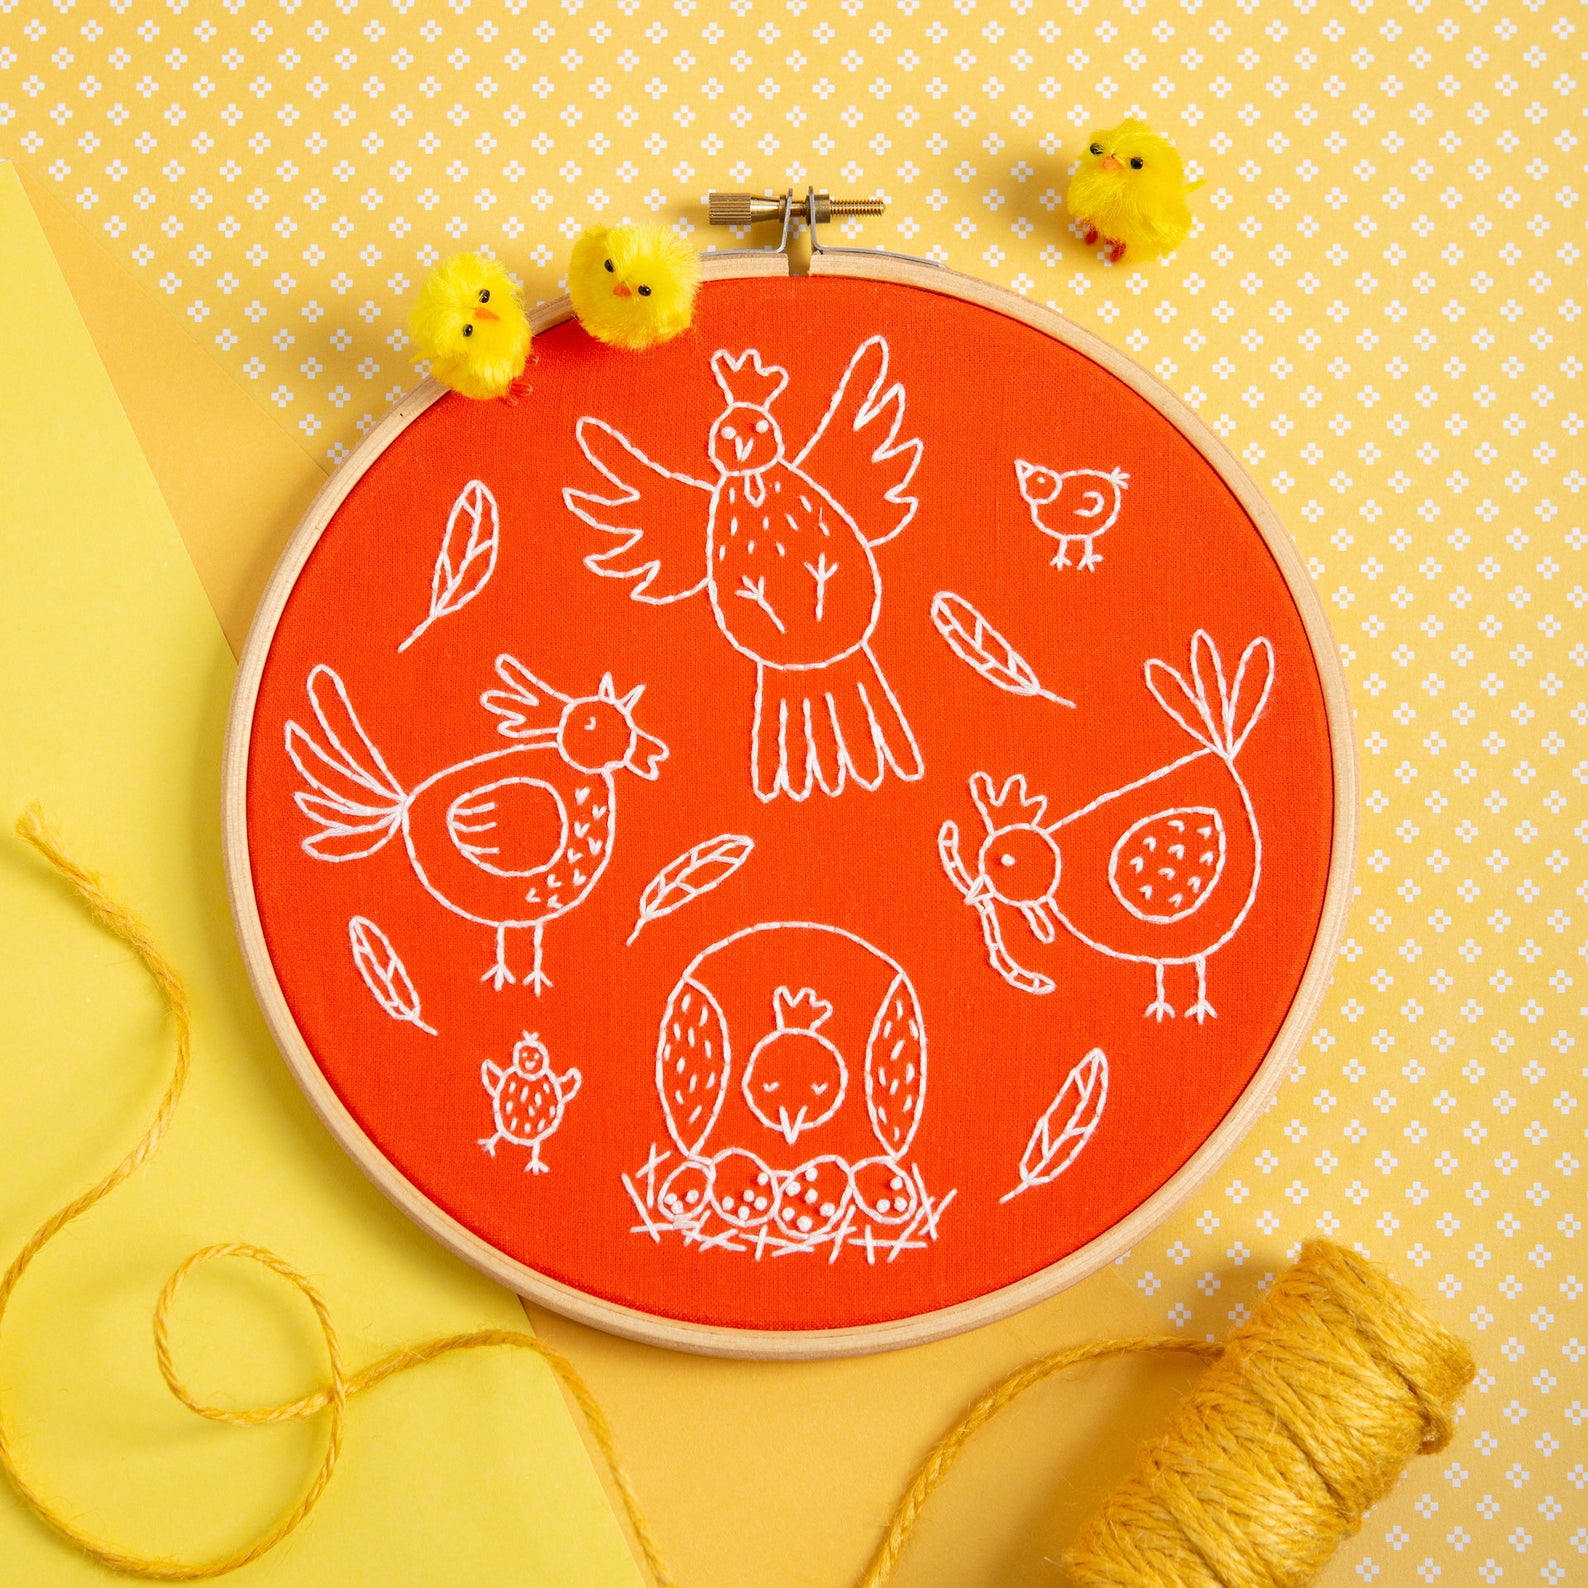 chicken embroidery design kit